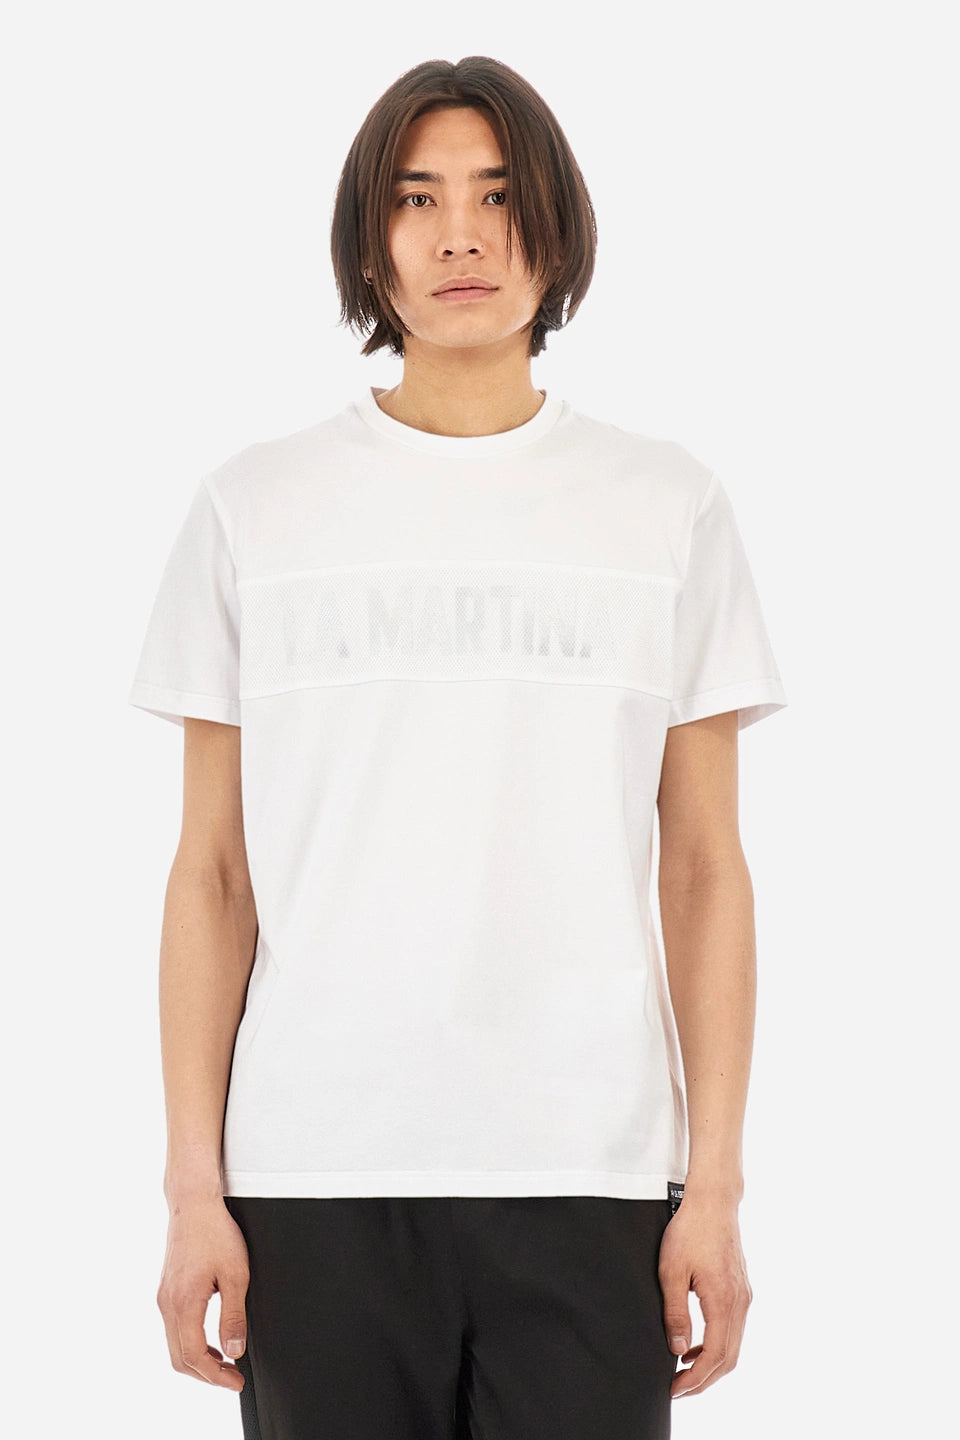 La Martina T-shirt Κανονικής Γραμμής από Ελαστικό Βαμβάκι-Yeshuda | Λευκό